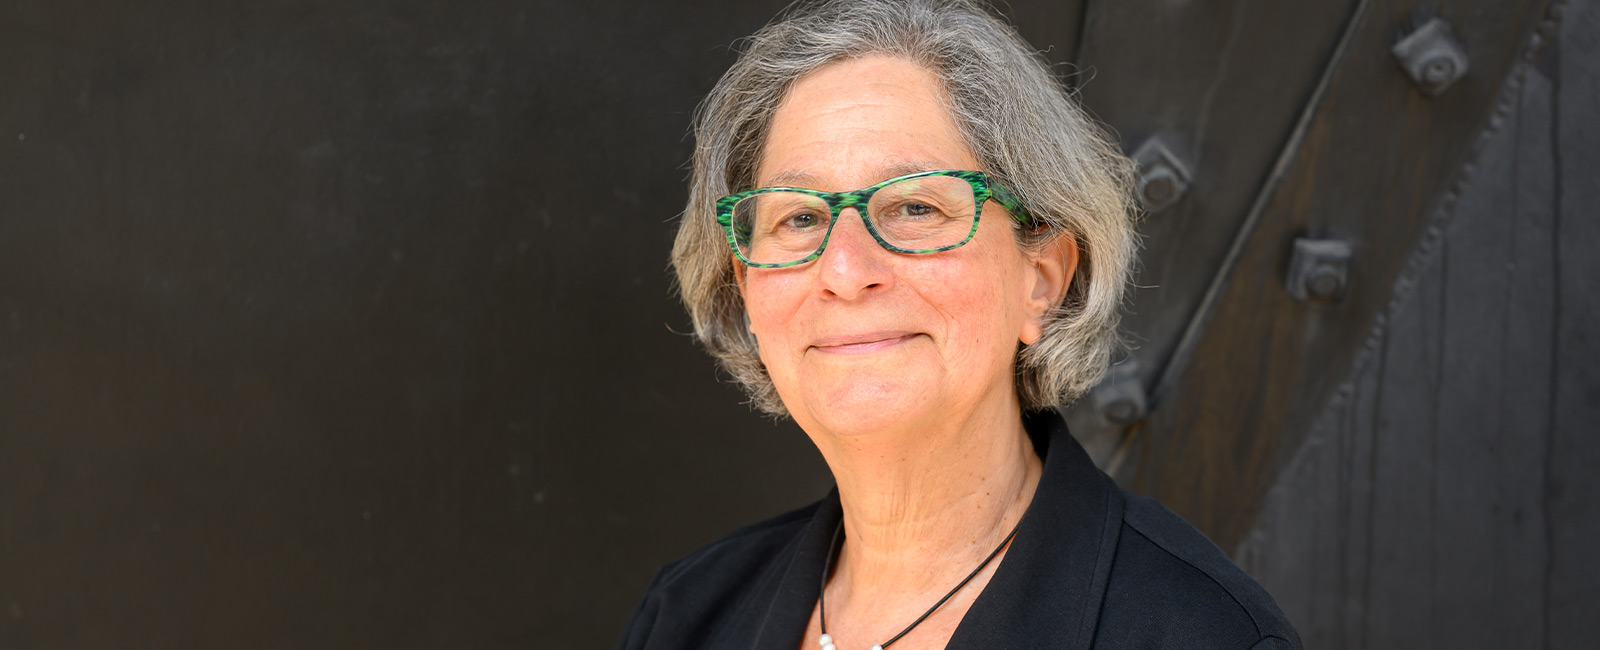 Professor Susan Solomon smiles in front of a dark background.